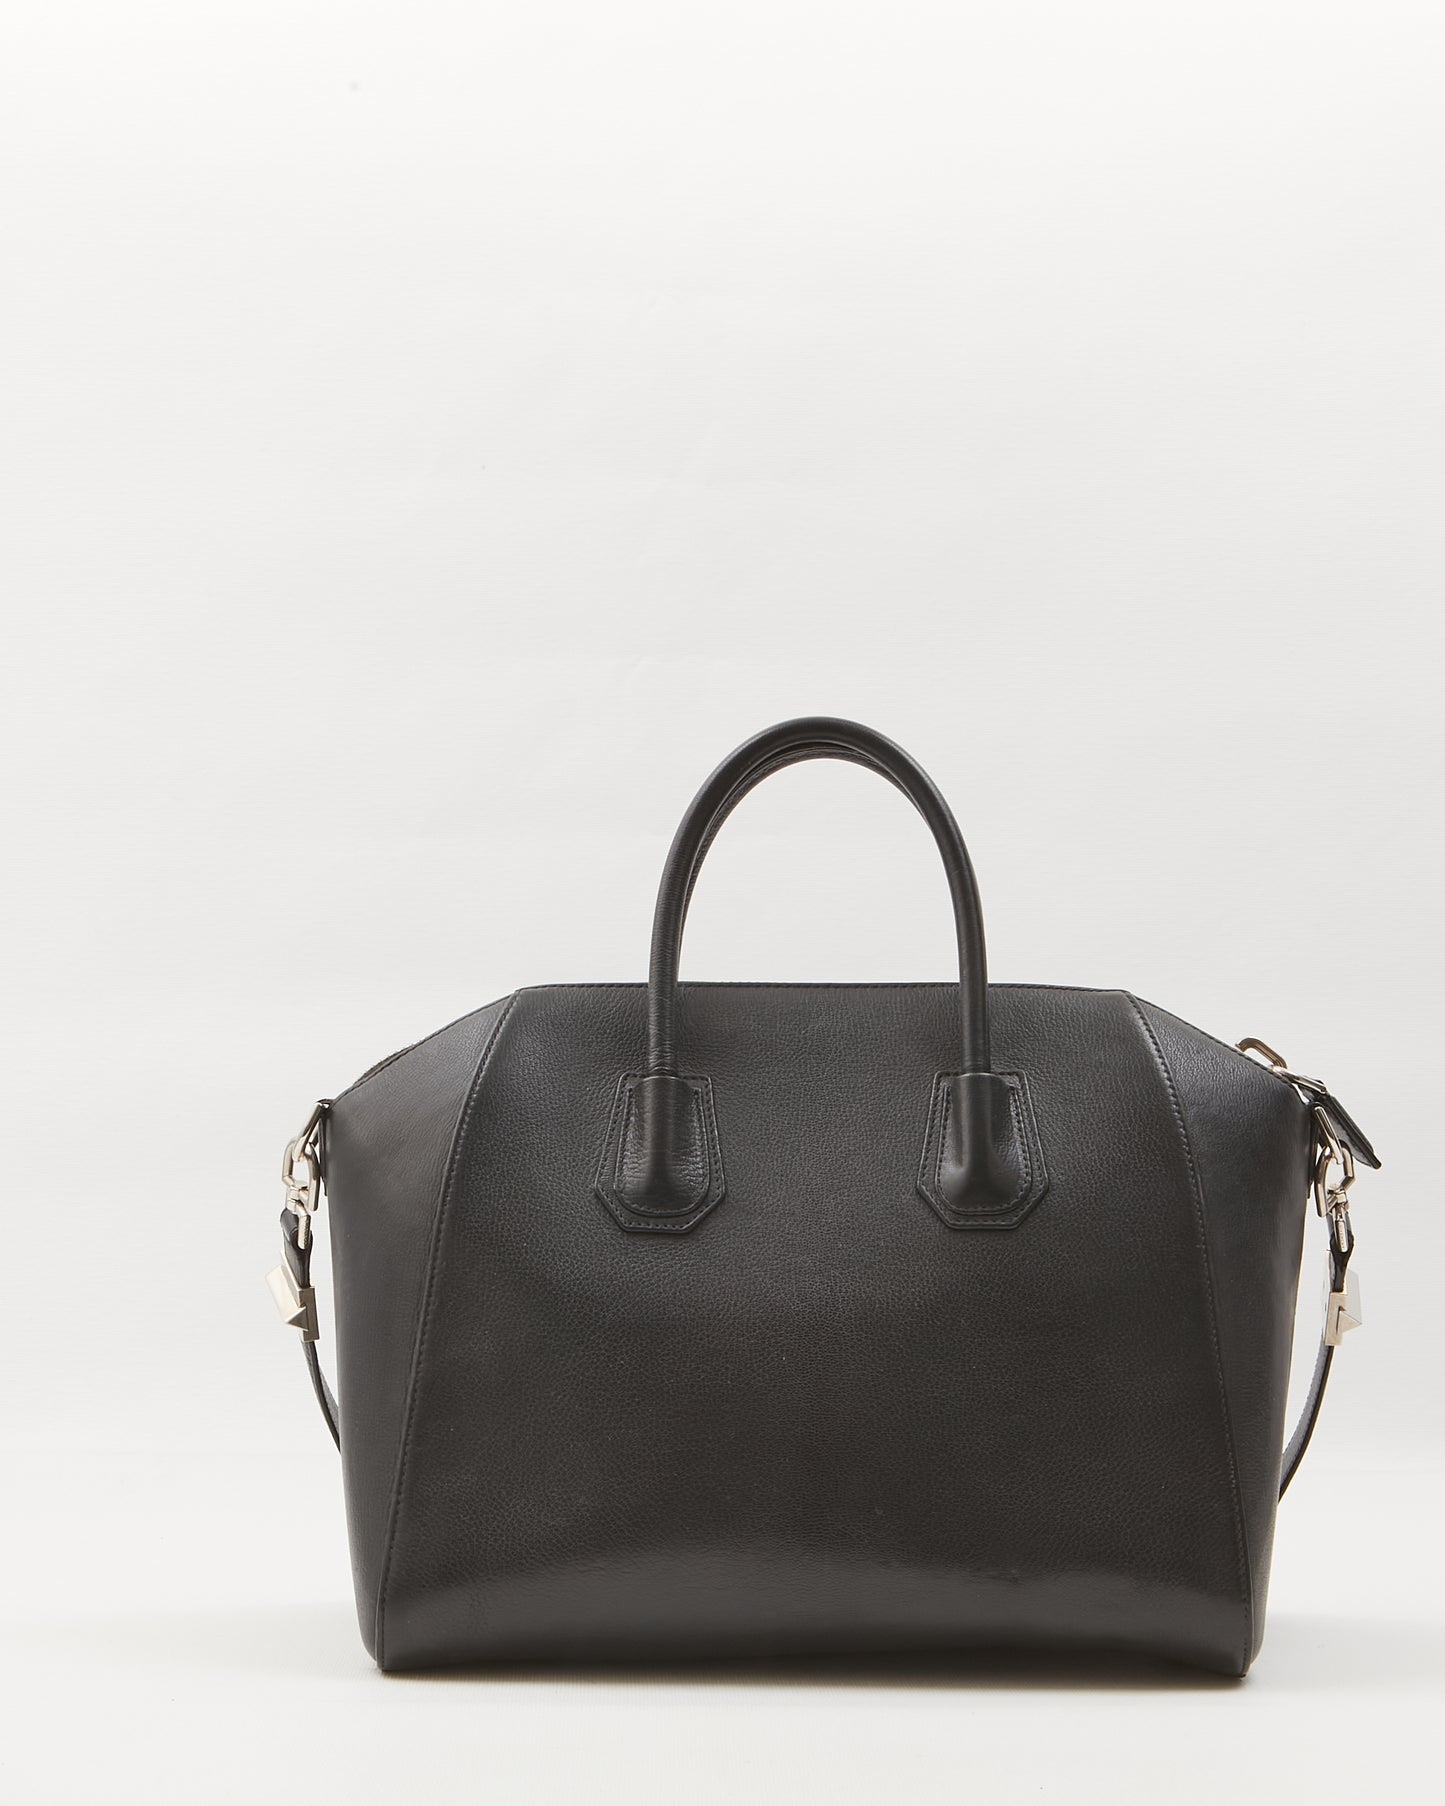 Givenchy Black Grained Leather Medium Antigona Bag